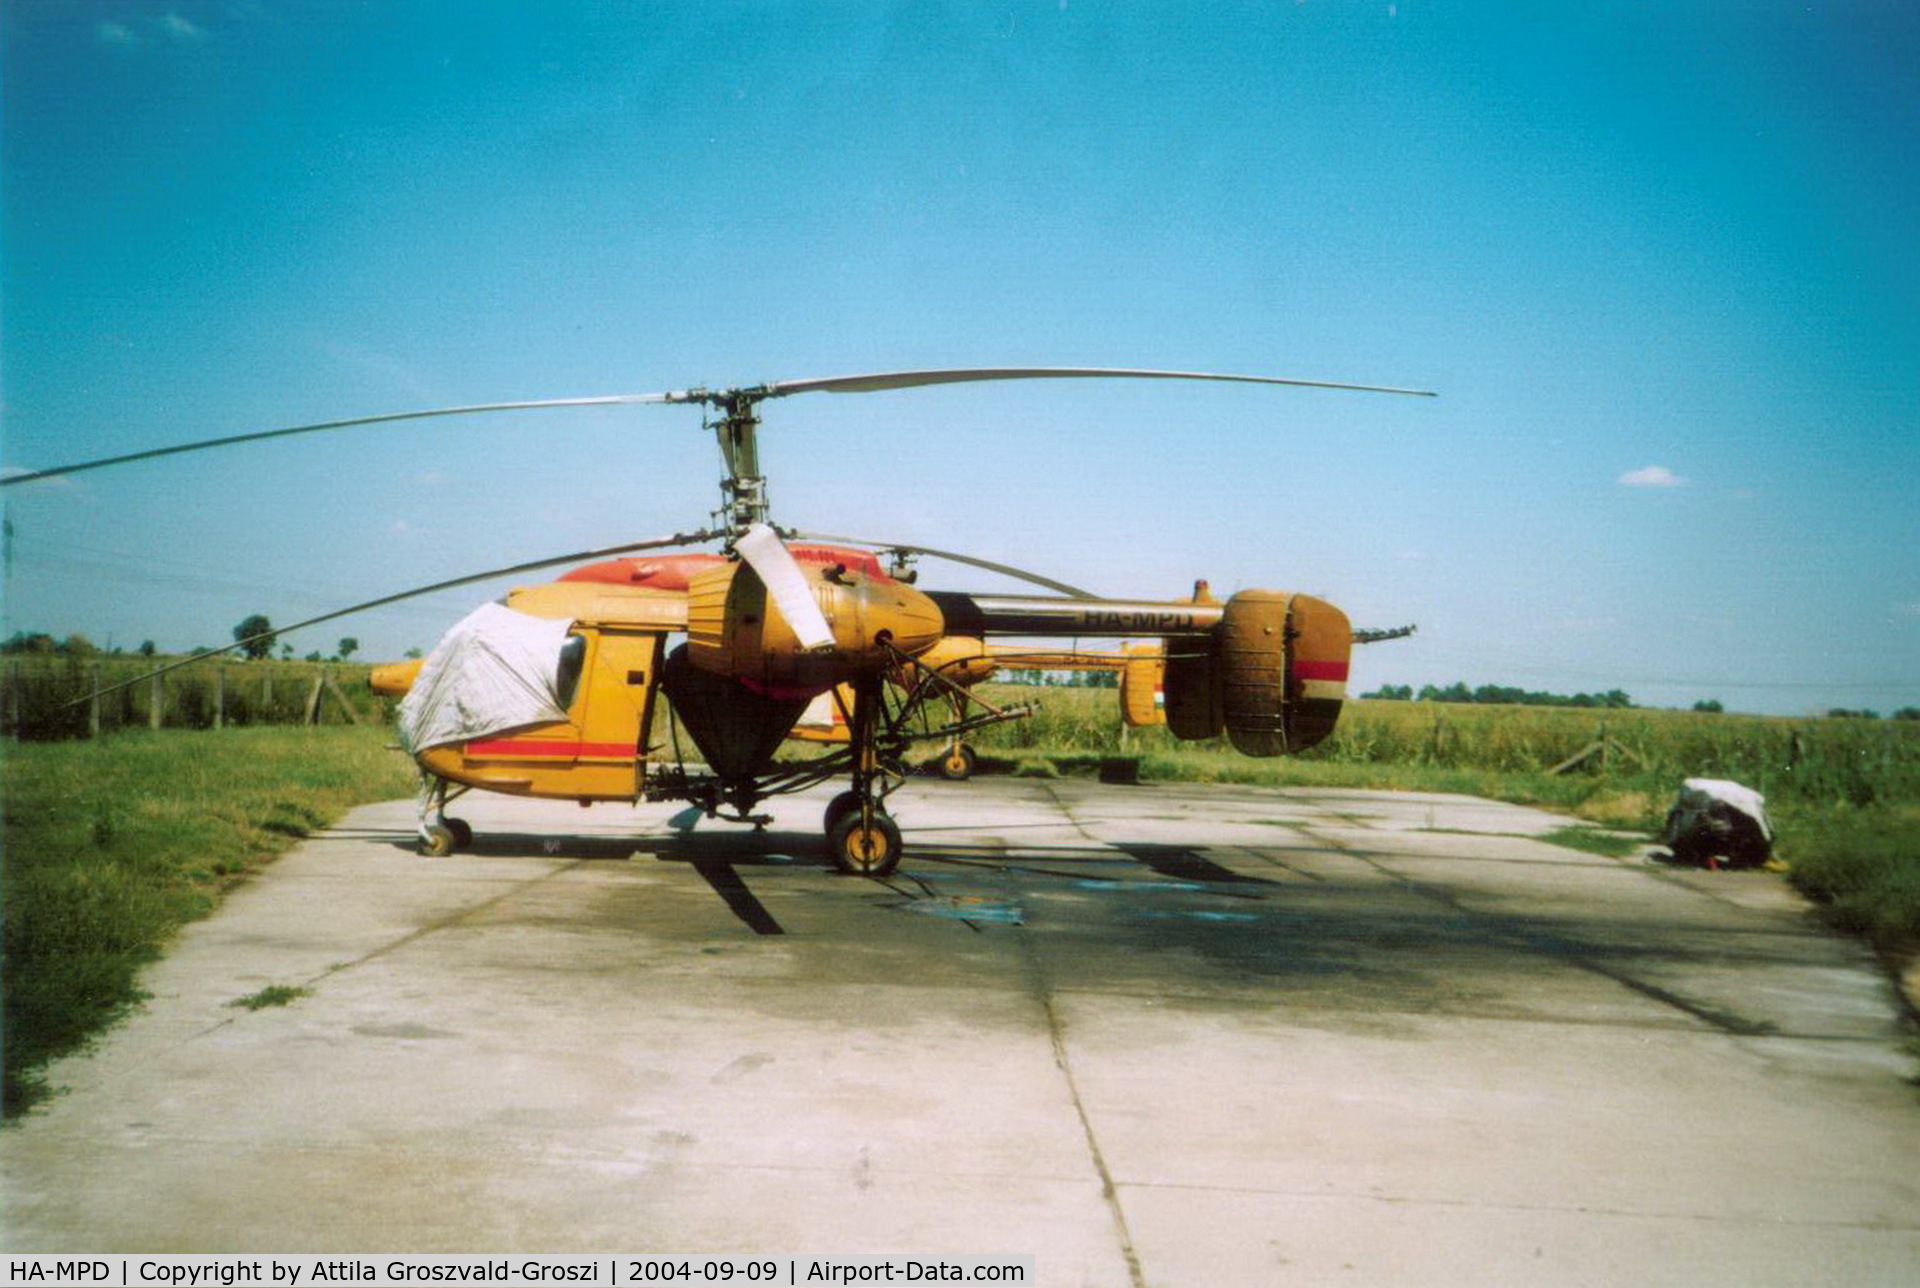 HA-MPD, 1977 Kamov Ka-26 Hoodlum C/N 7706111, Cegléd-Huszárdülö agricultural take-off field